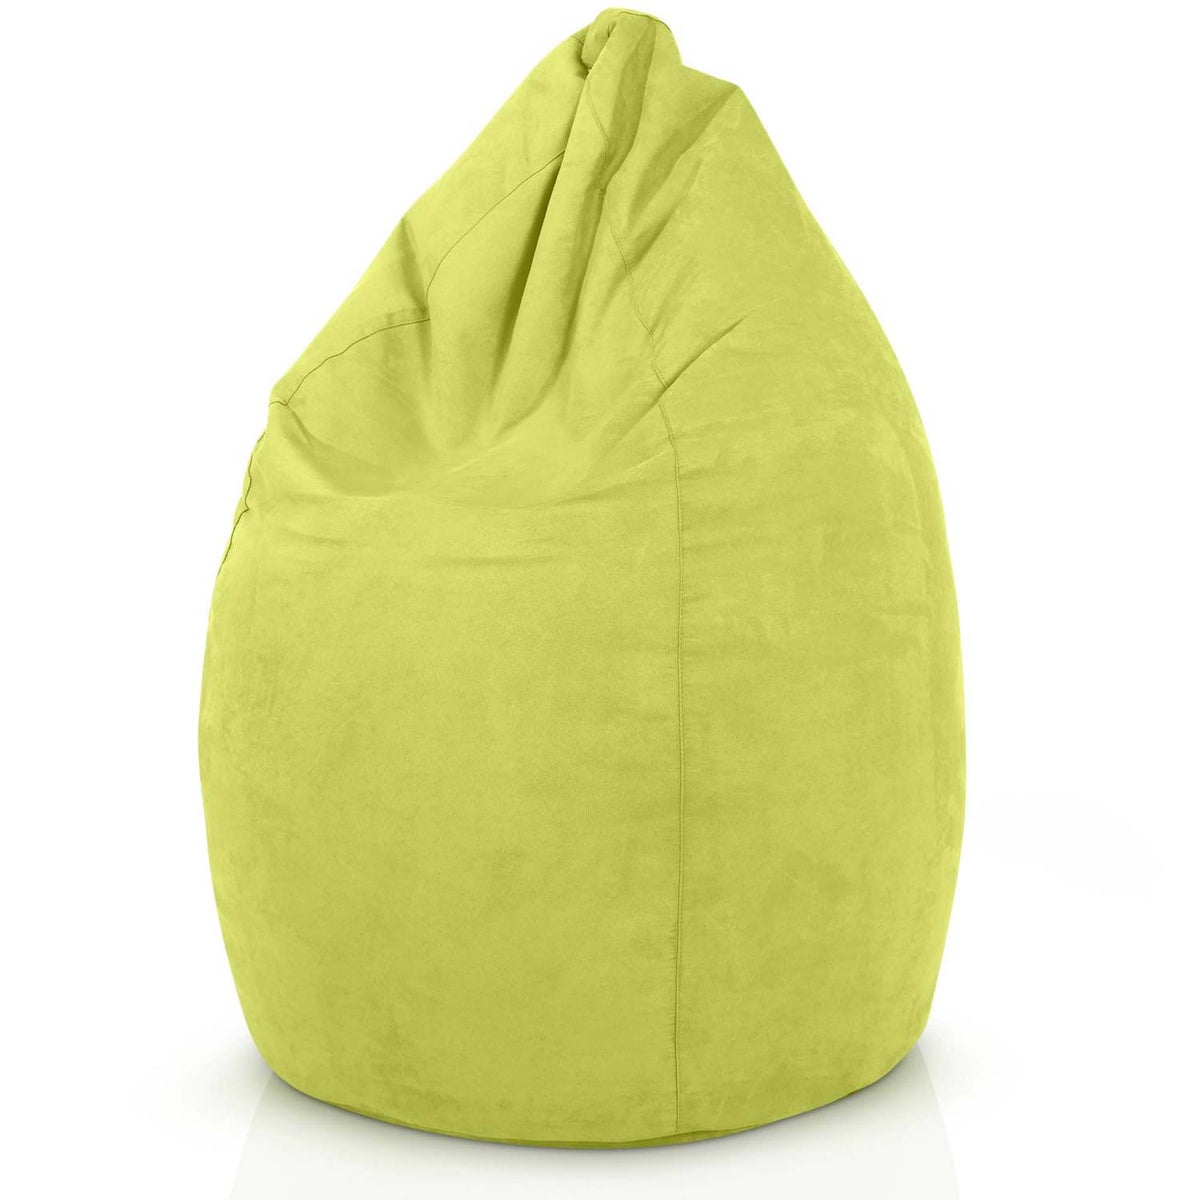 Green Bean© Sitzsack mit Rückenlehne 60x60x90cm - Indoor Sitzkissen 220L Füllung Kuschelig Waschbar - Bean Bag Bodenkissen Lounge Chair Sitzhocker - Grün